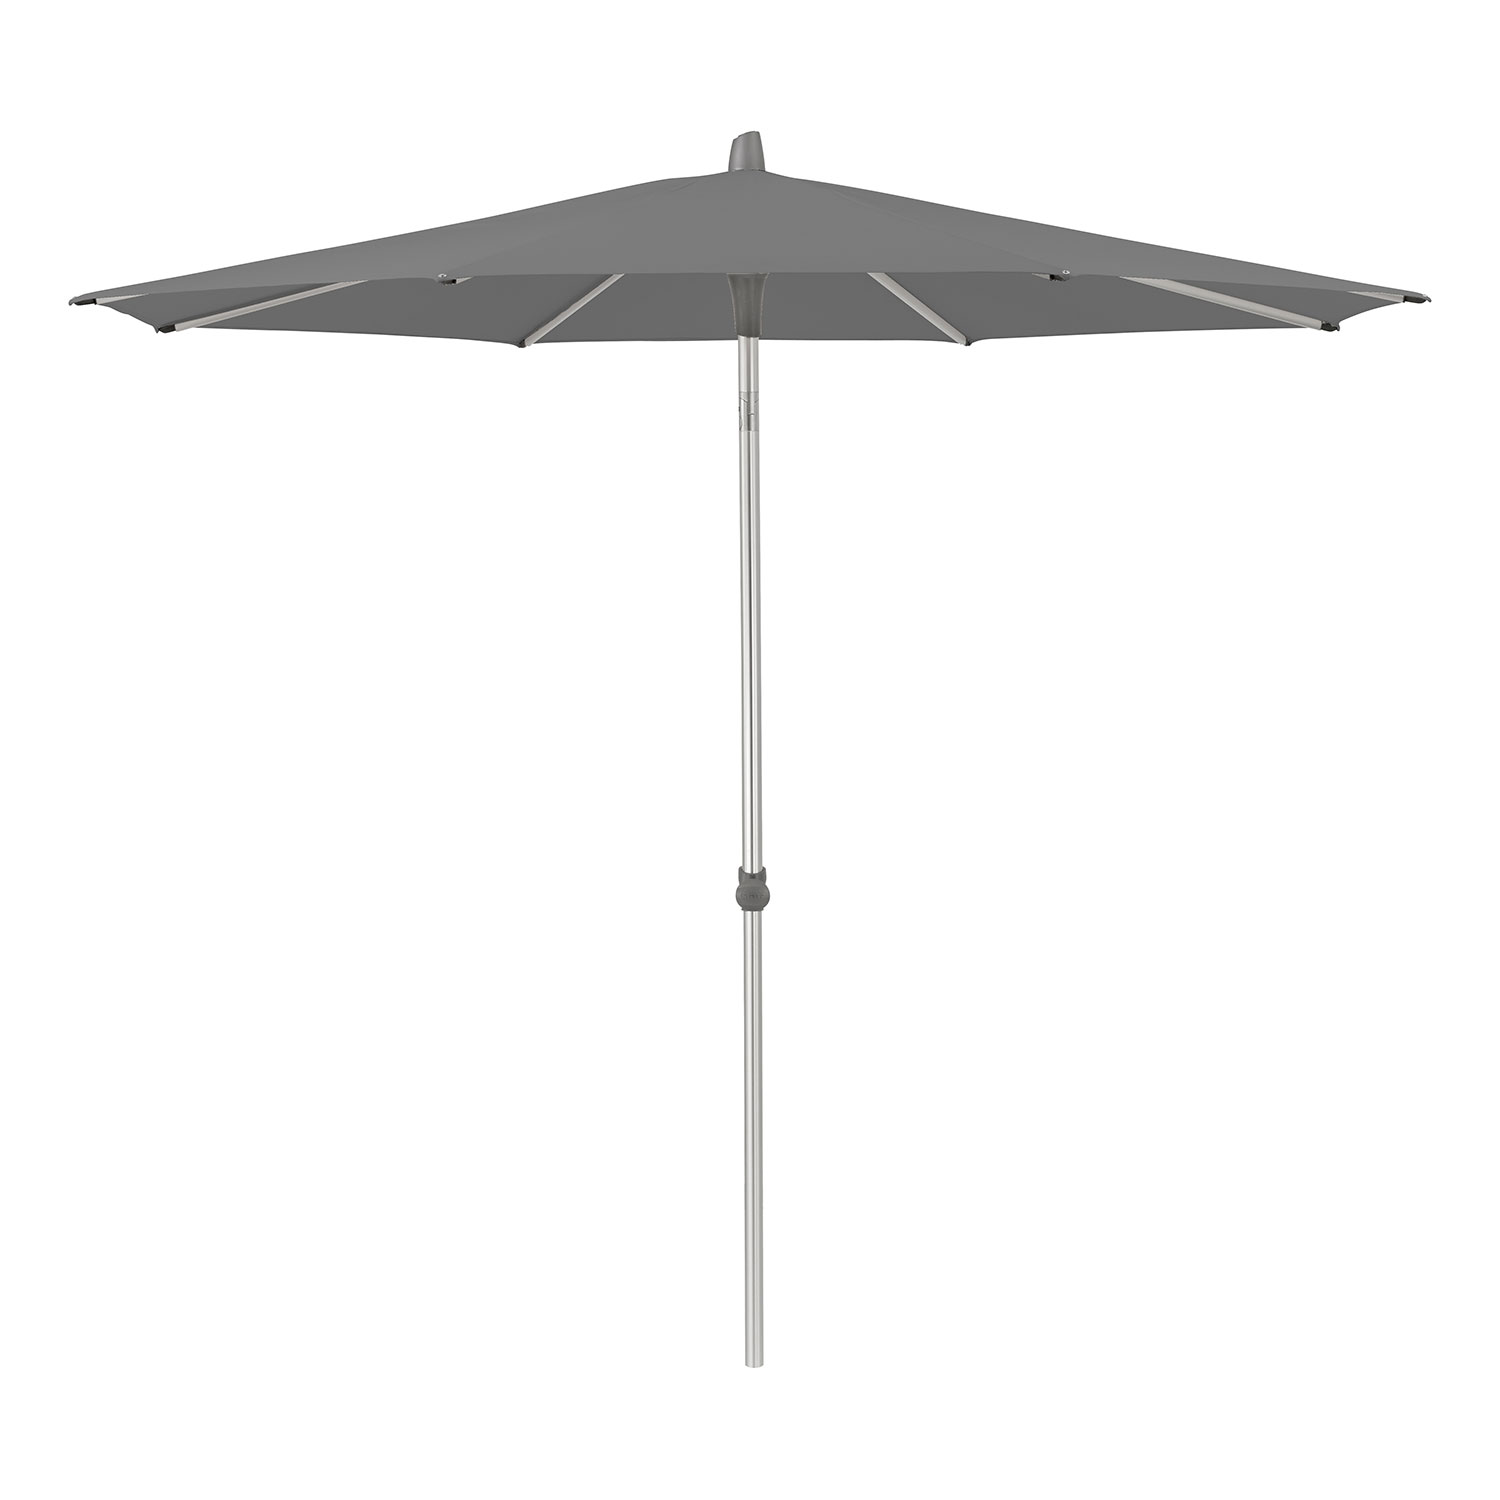 Glatz Alu-smart parasoll 250 cm kat.5 684 urban shadow